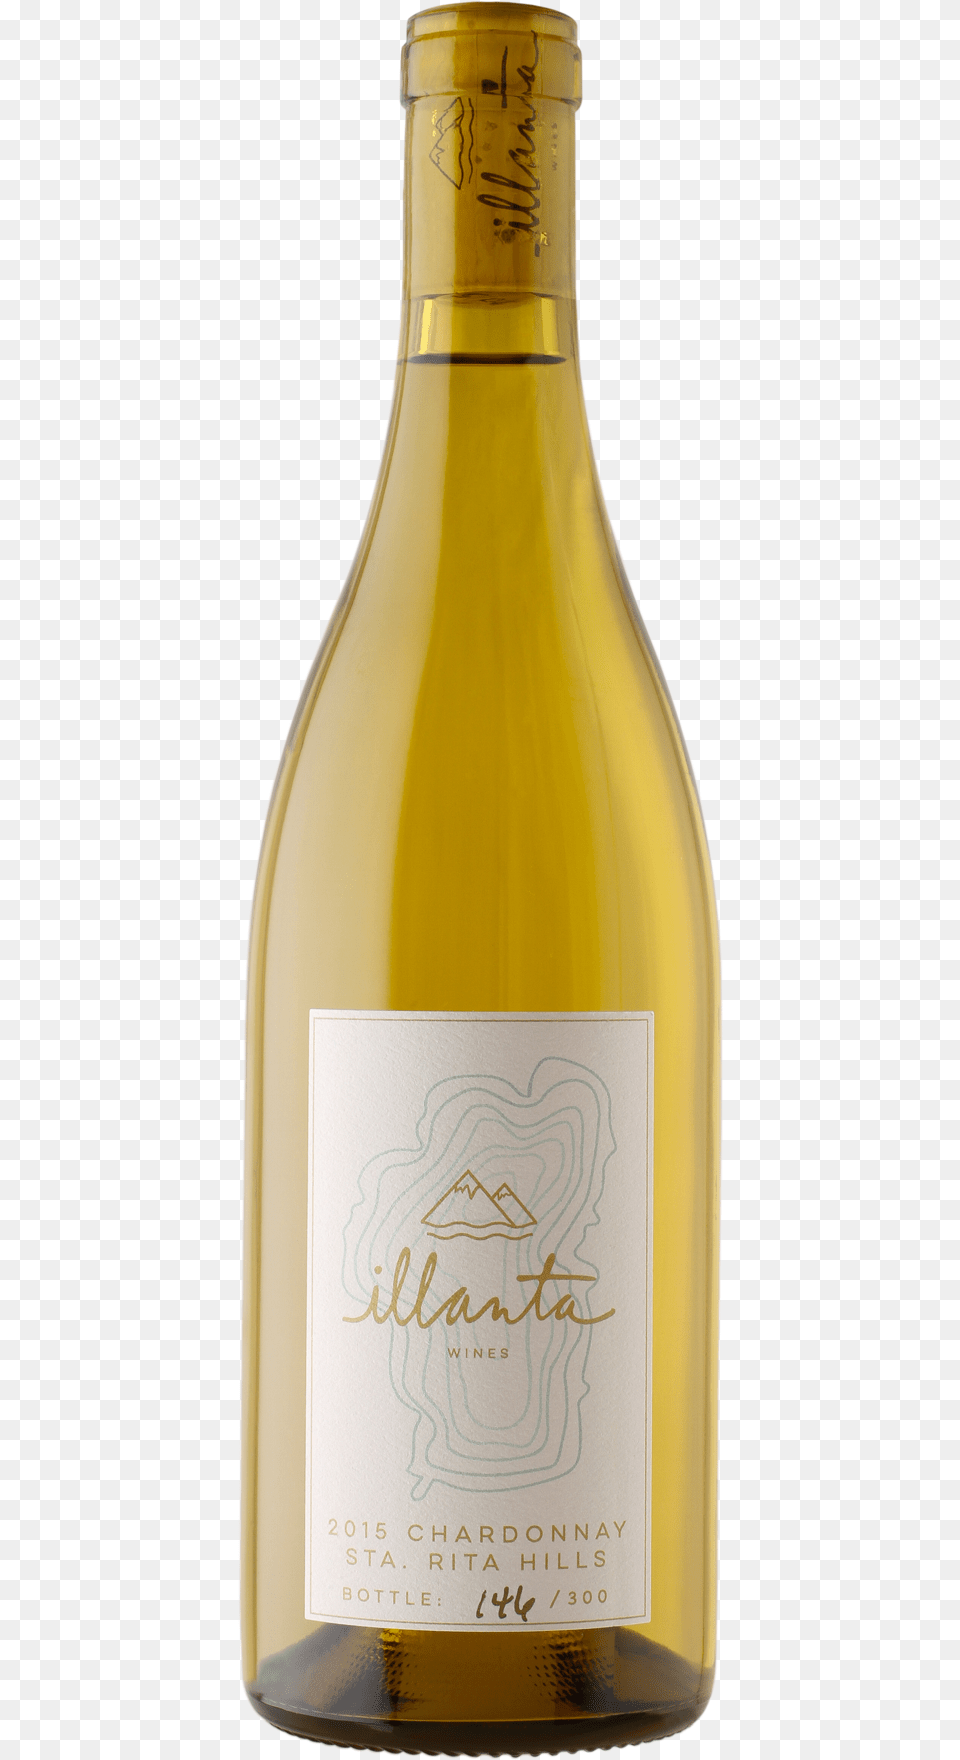 Illante Santa Rita Hills Chardonnay 2015, Alcohol, Beverage, Bottle, Liquor Png